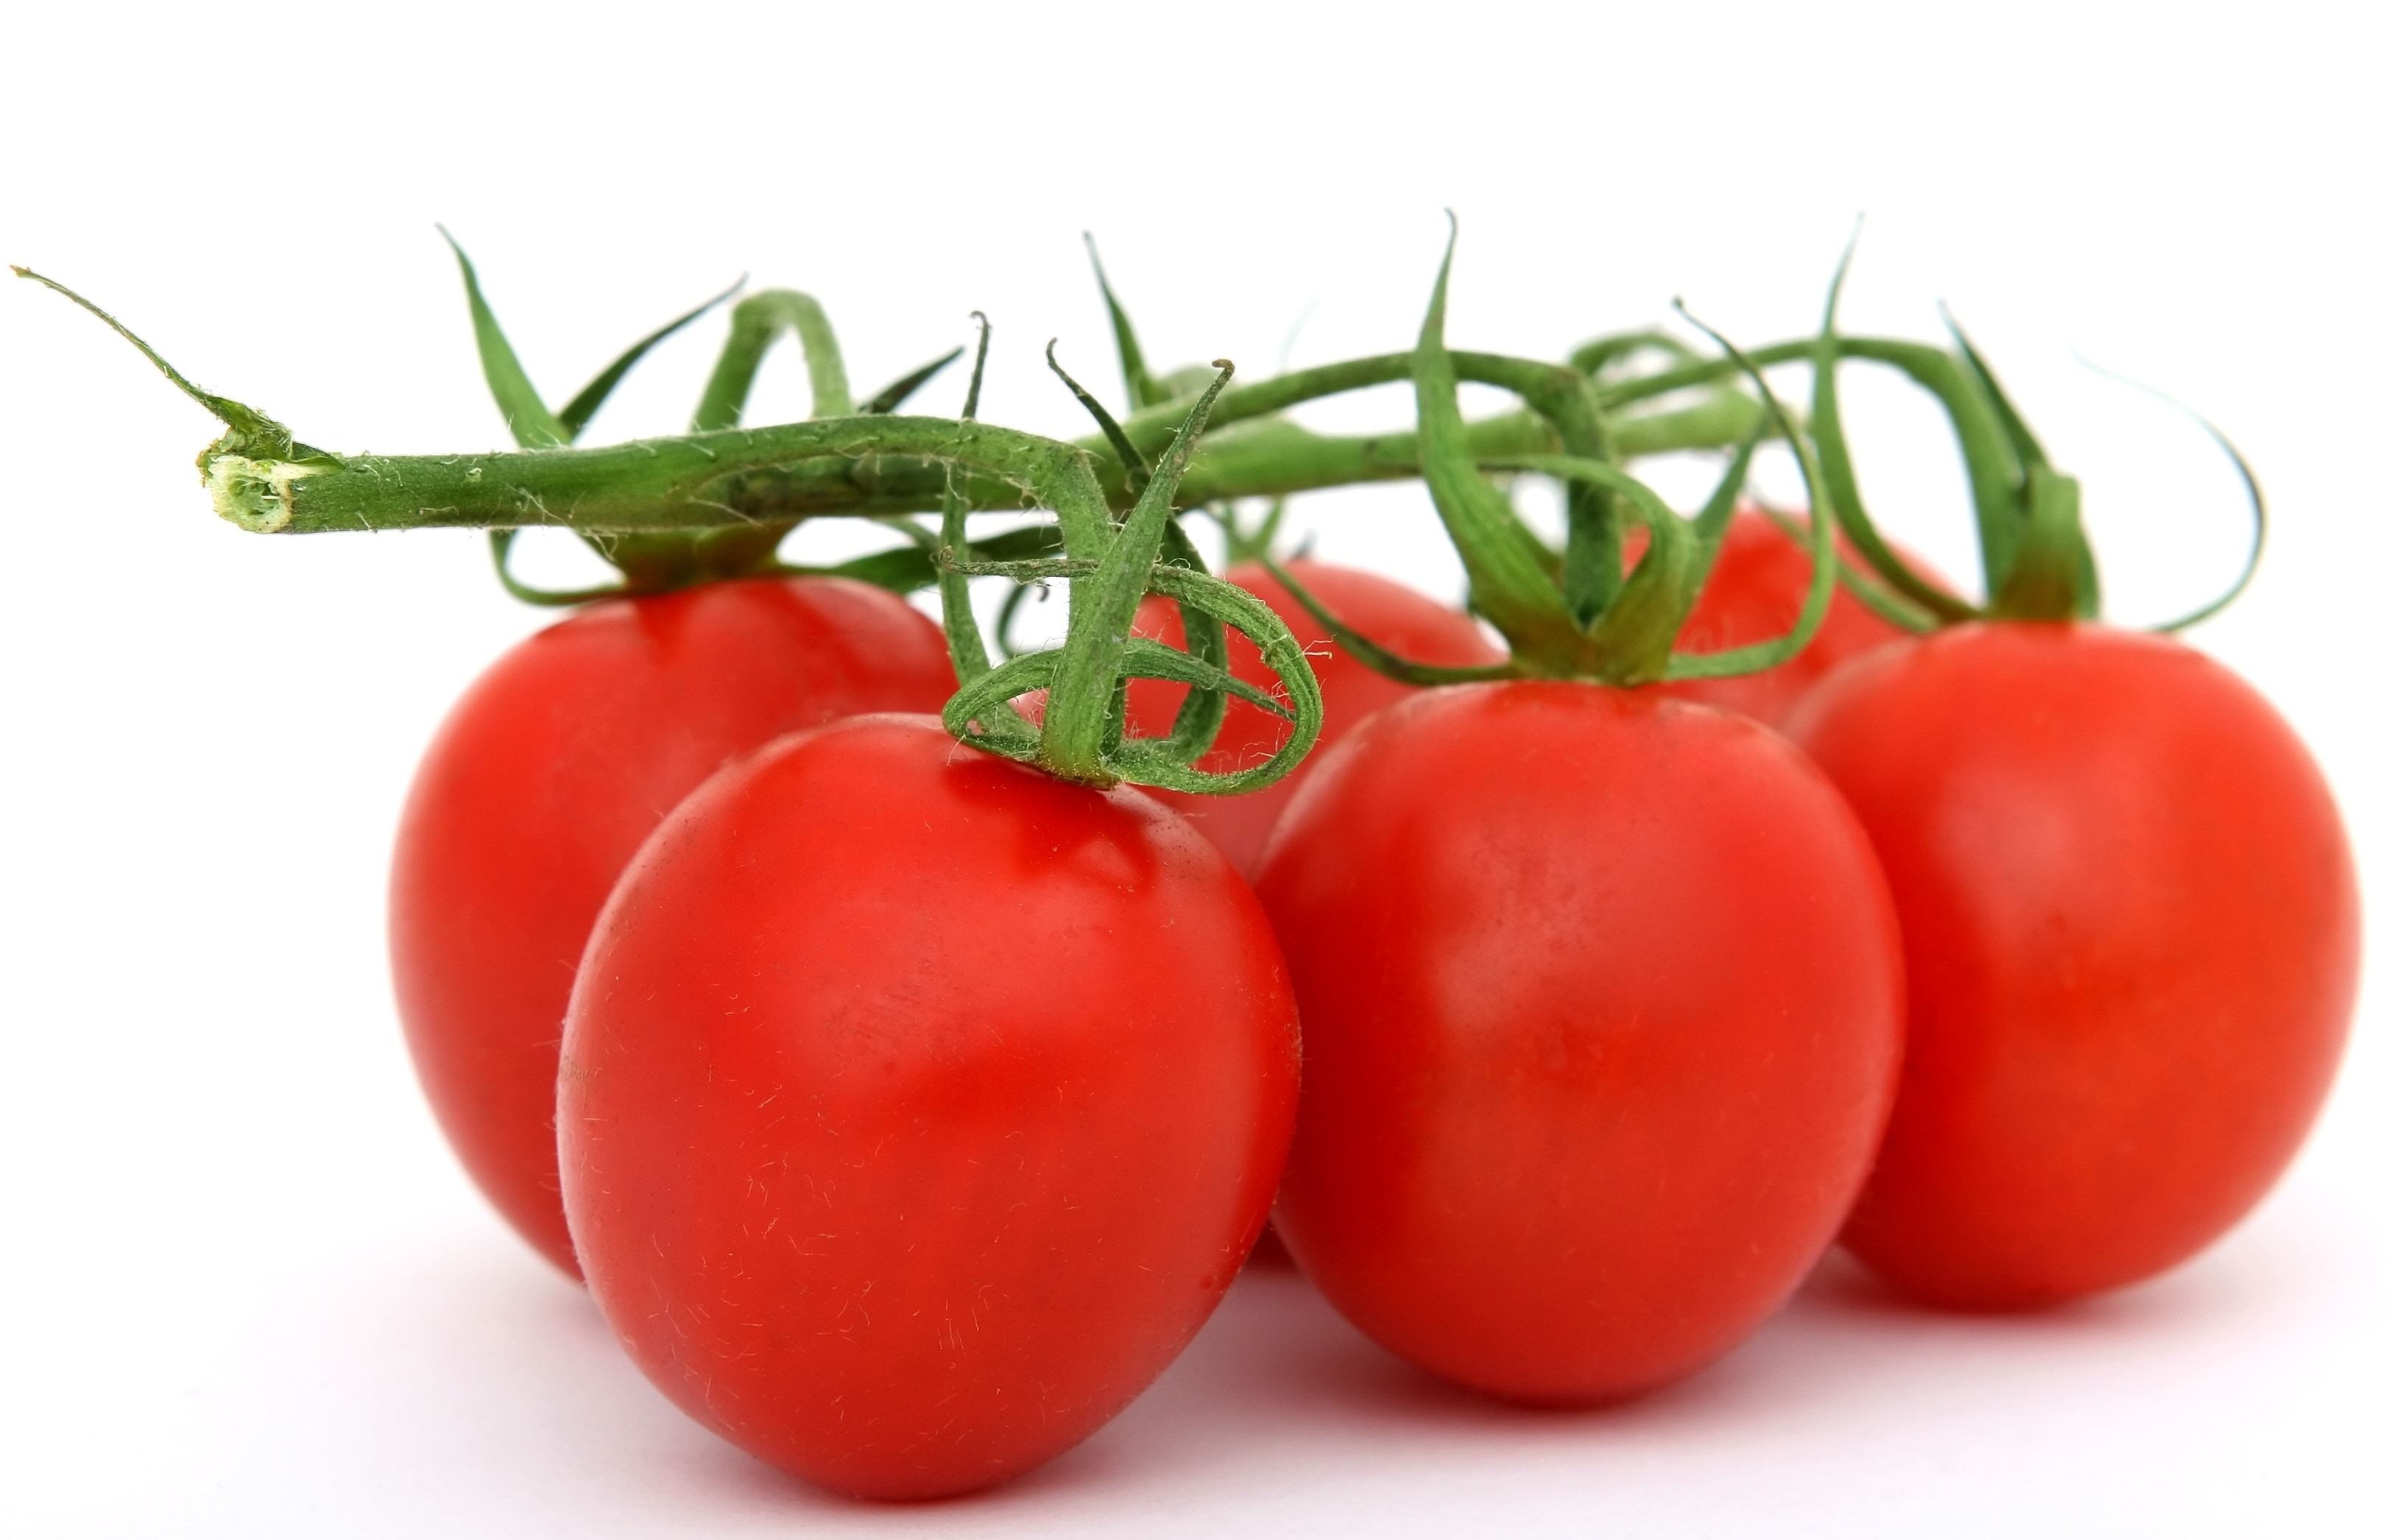 6 tomatoes